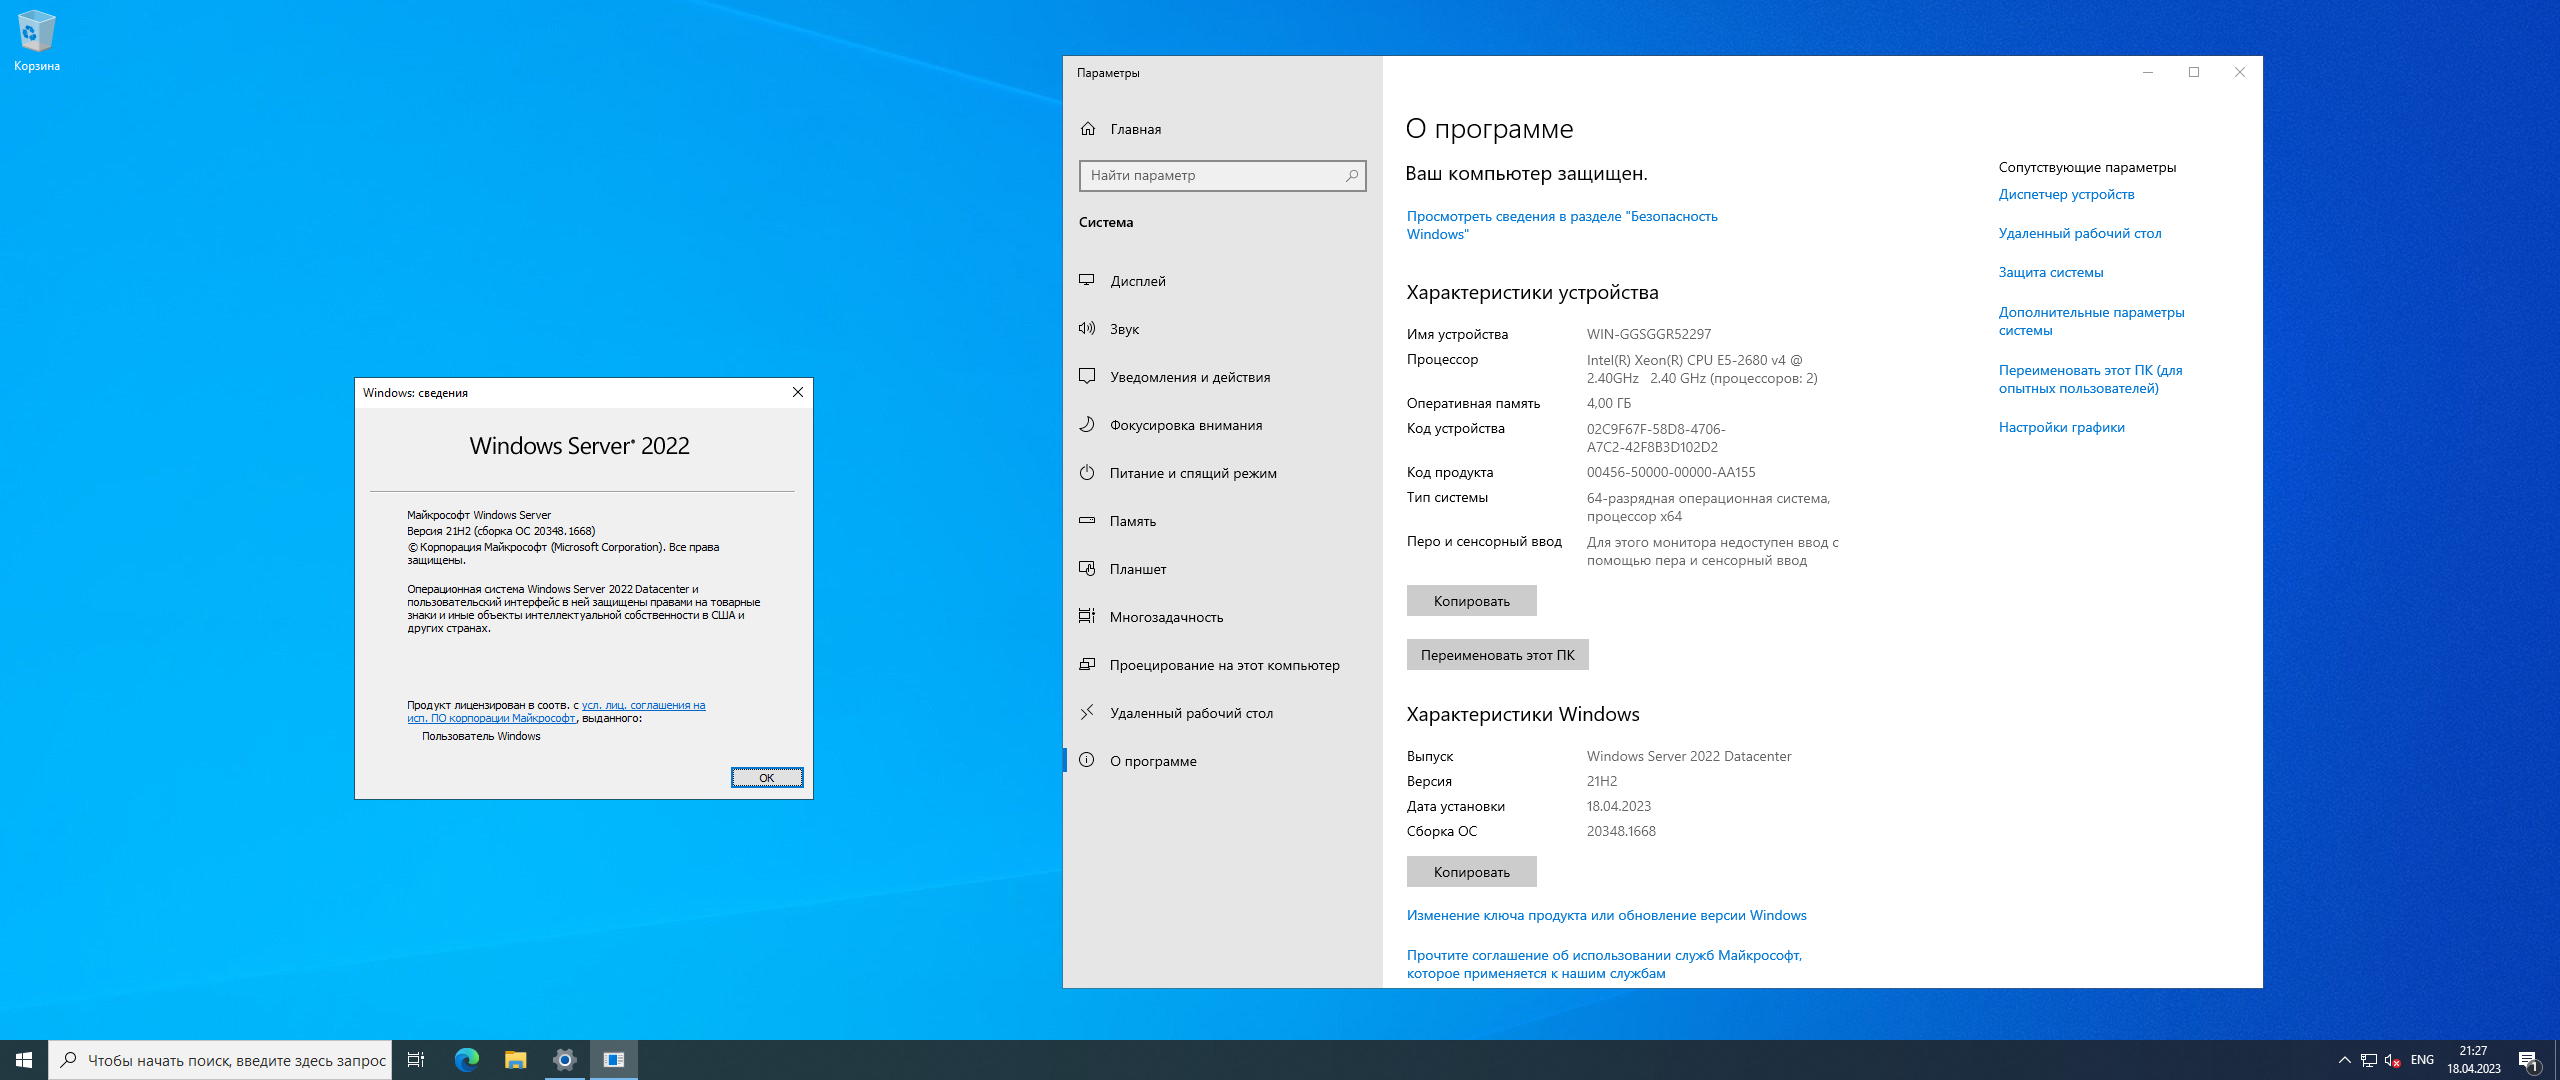 Windows Server 2022 LTSC, Version 21H2 Build 20348.1668 (Updated April 2023) - Оригинальные образы от Microsoft MSDN [Ru/En]